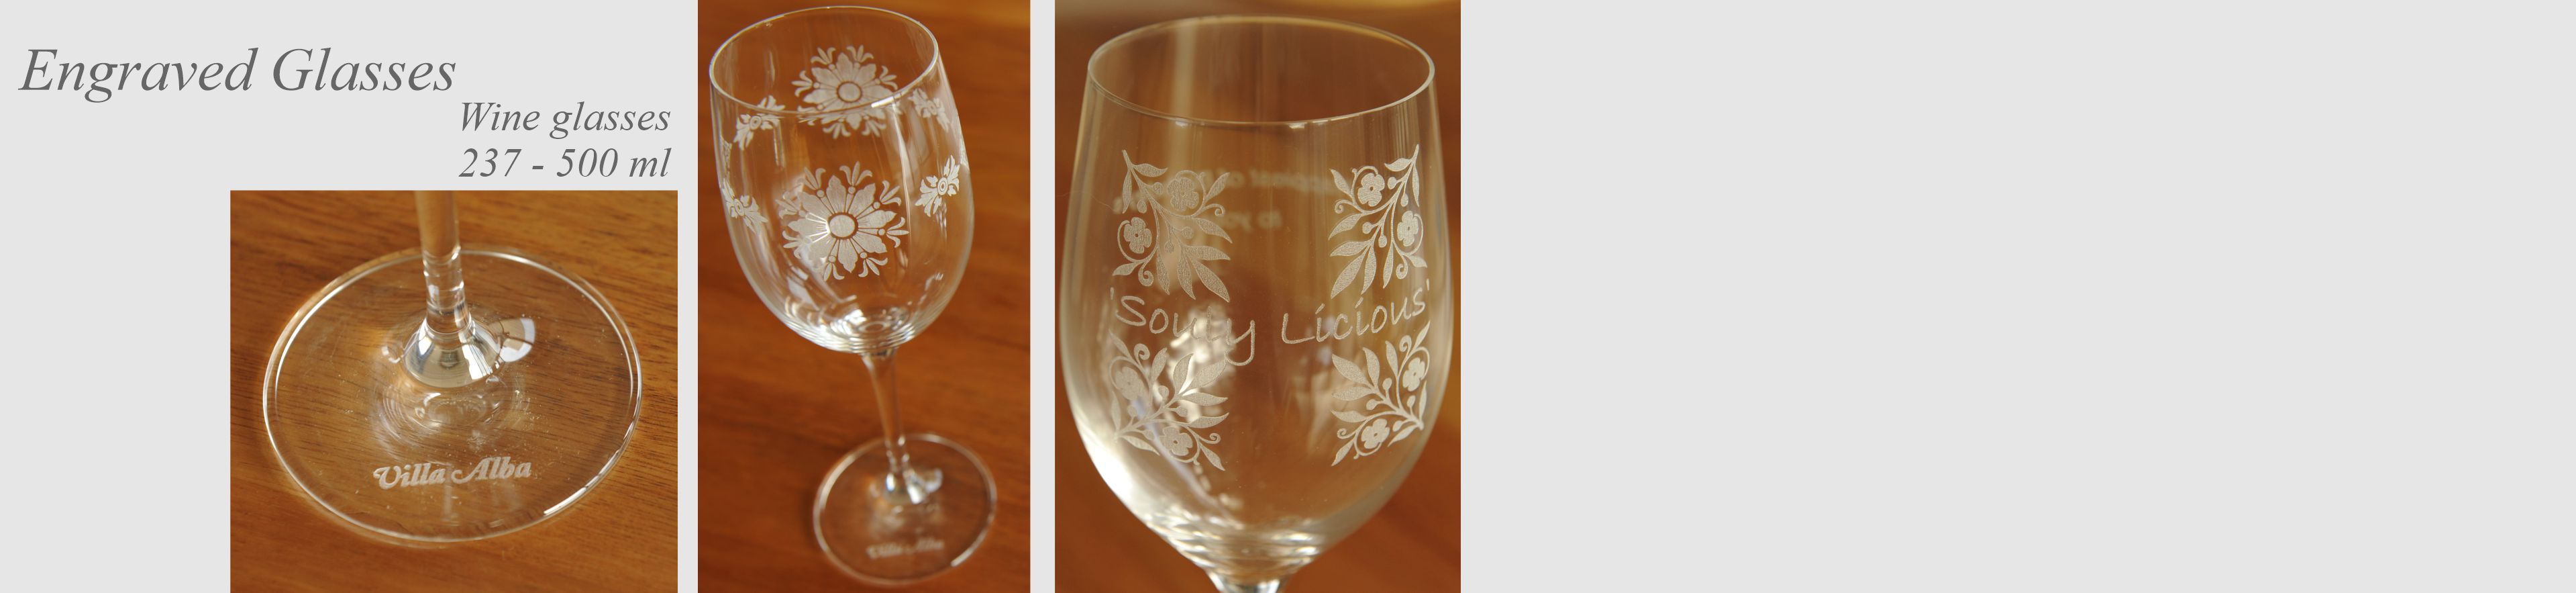 Wine glasses engraved